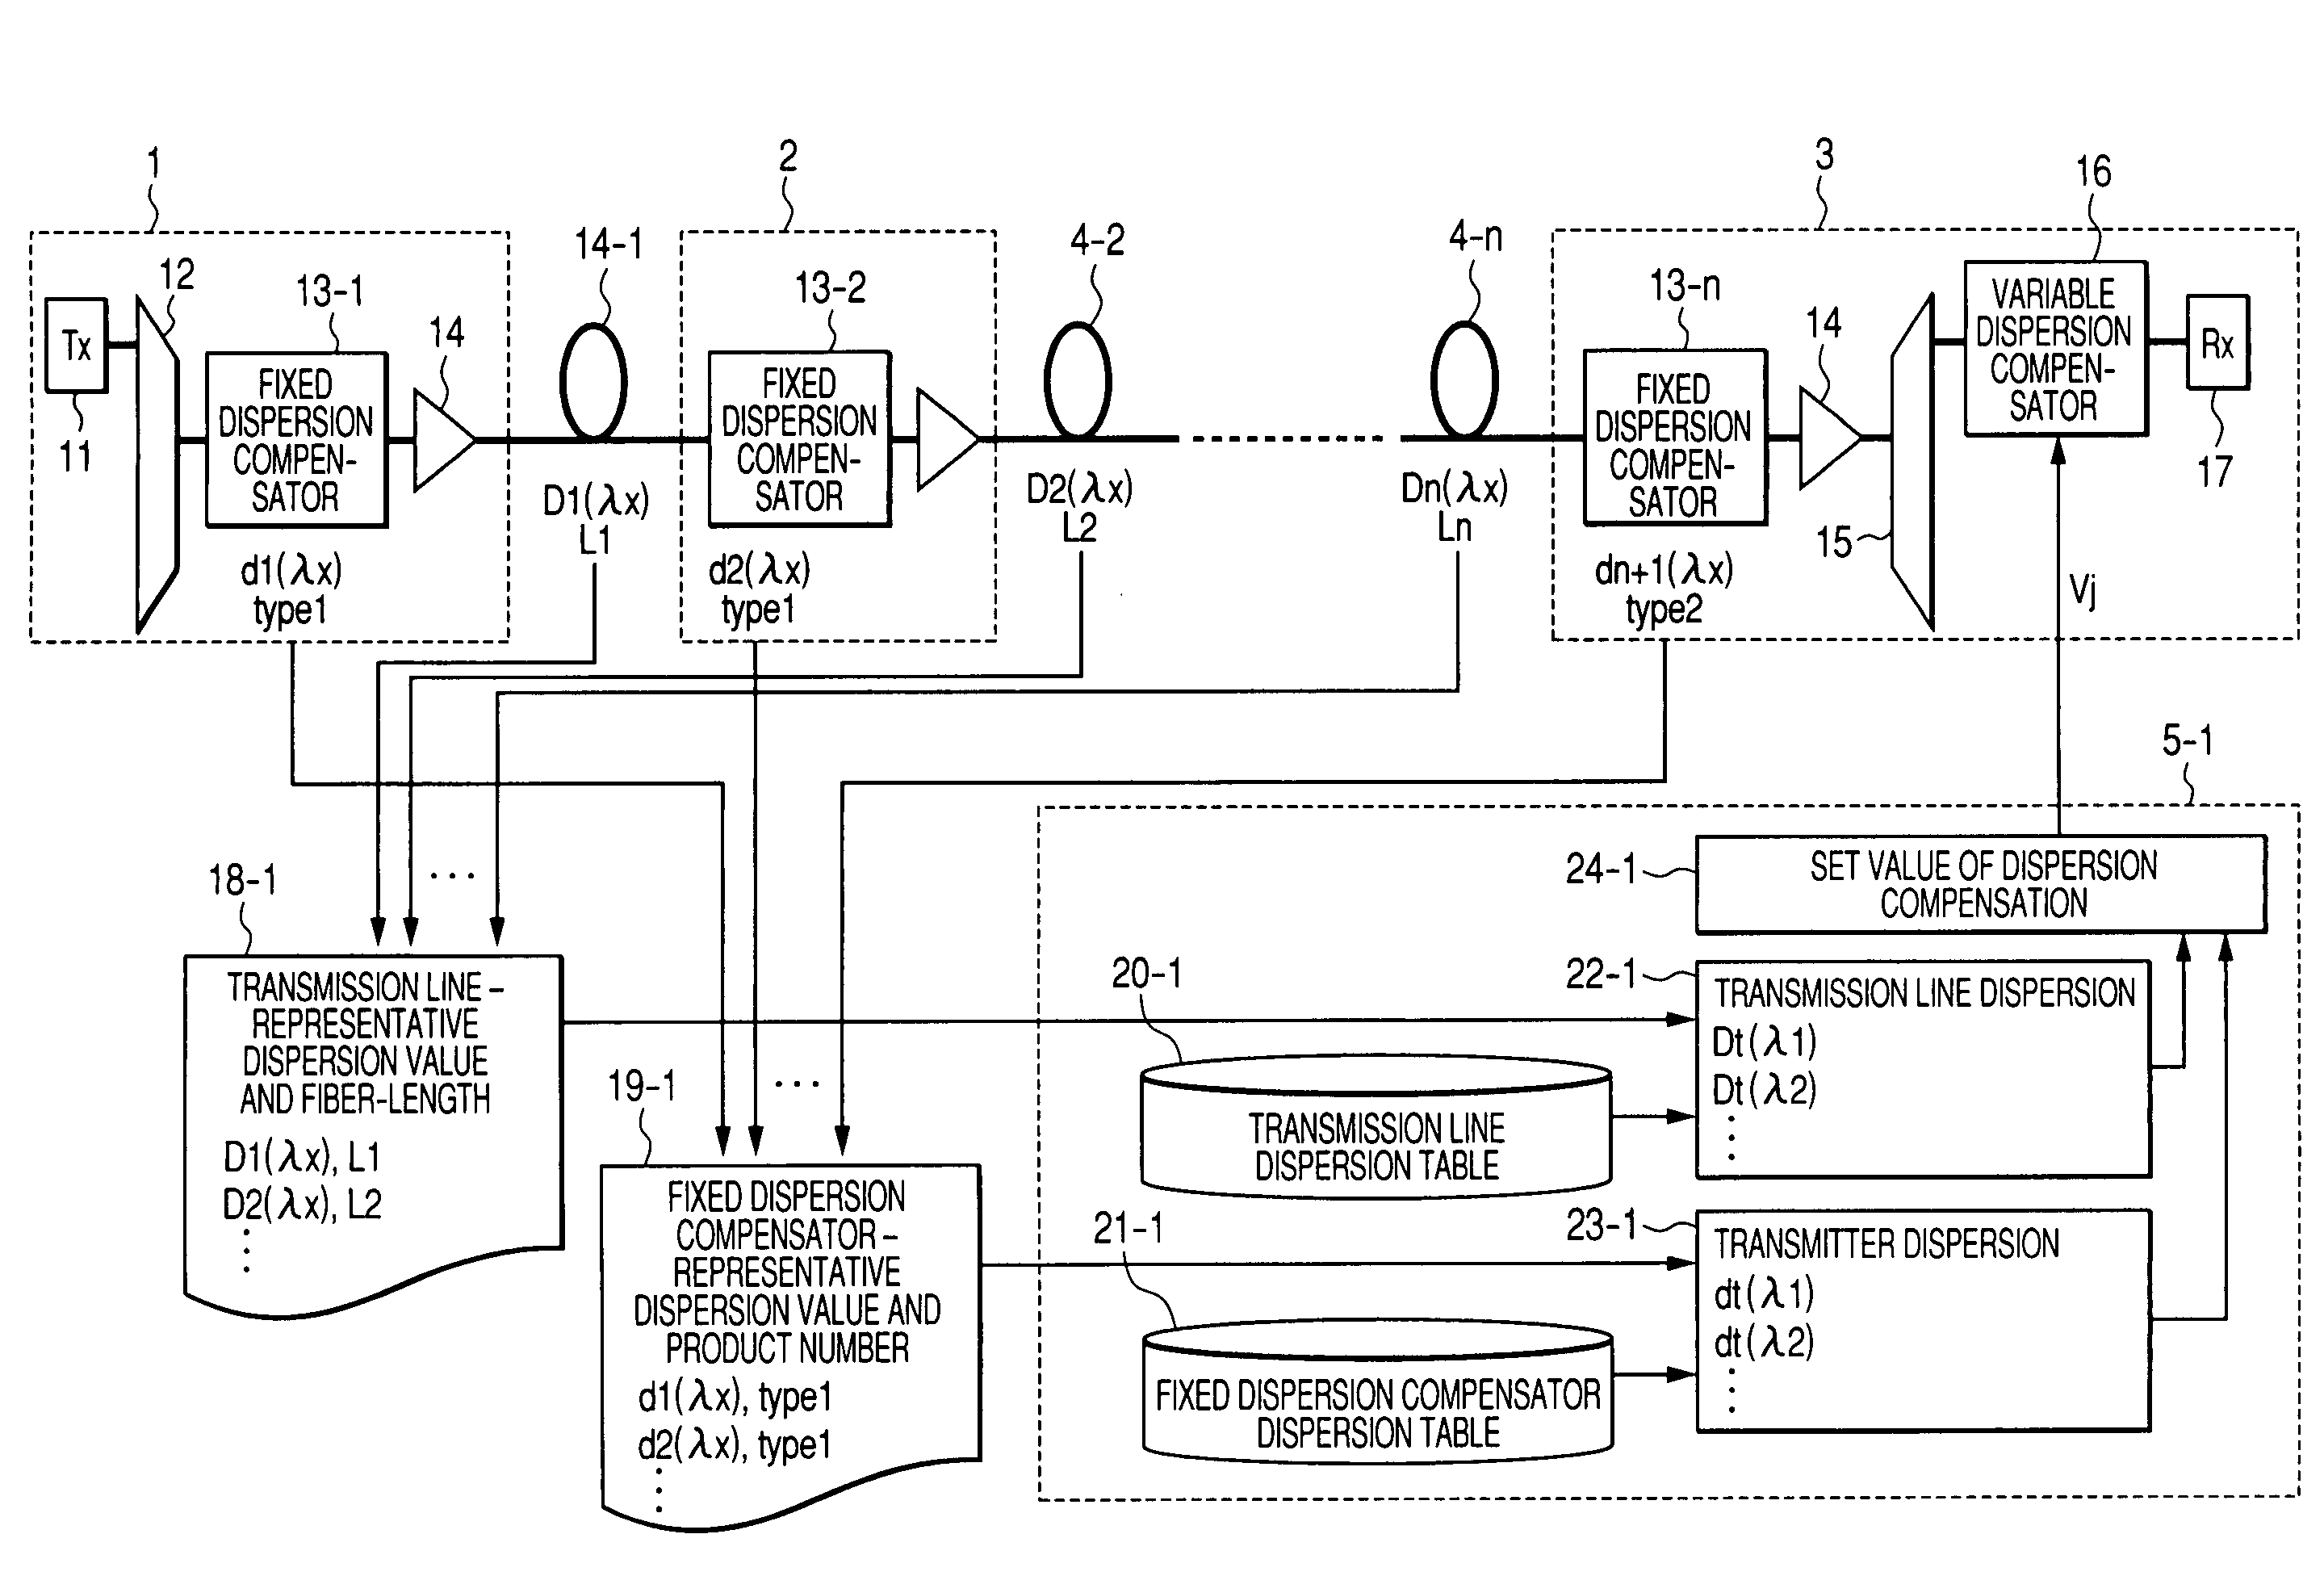 Wavelength division multiplex (WDM) transmission system